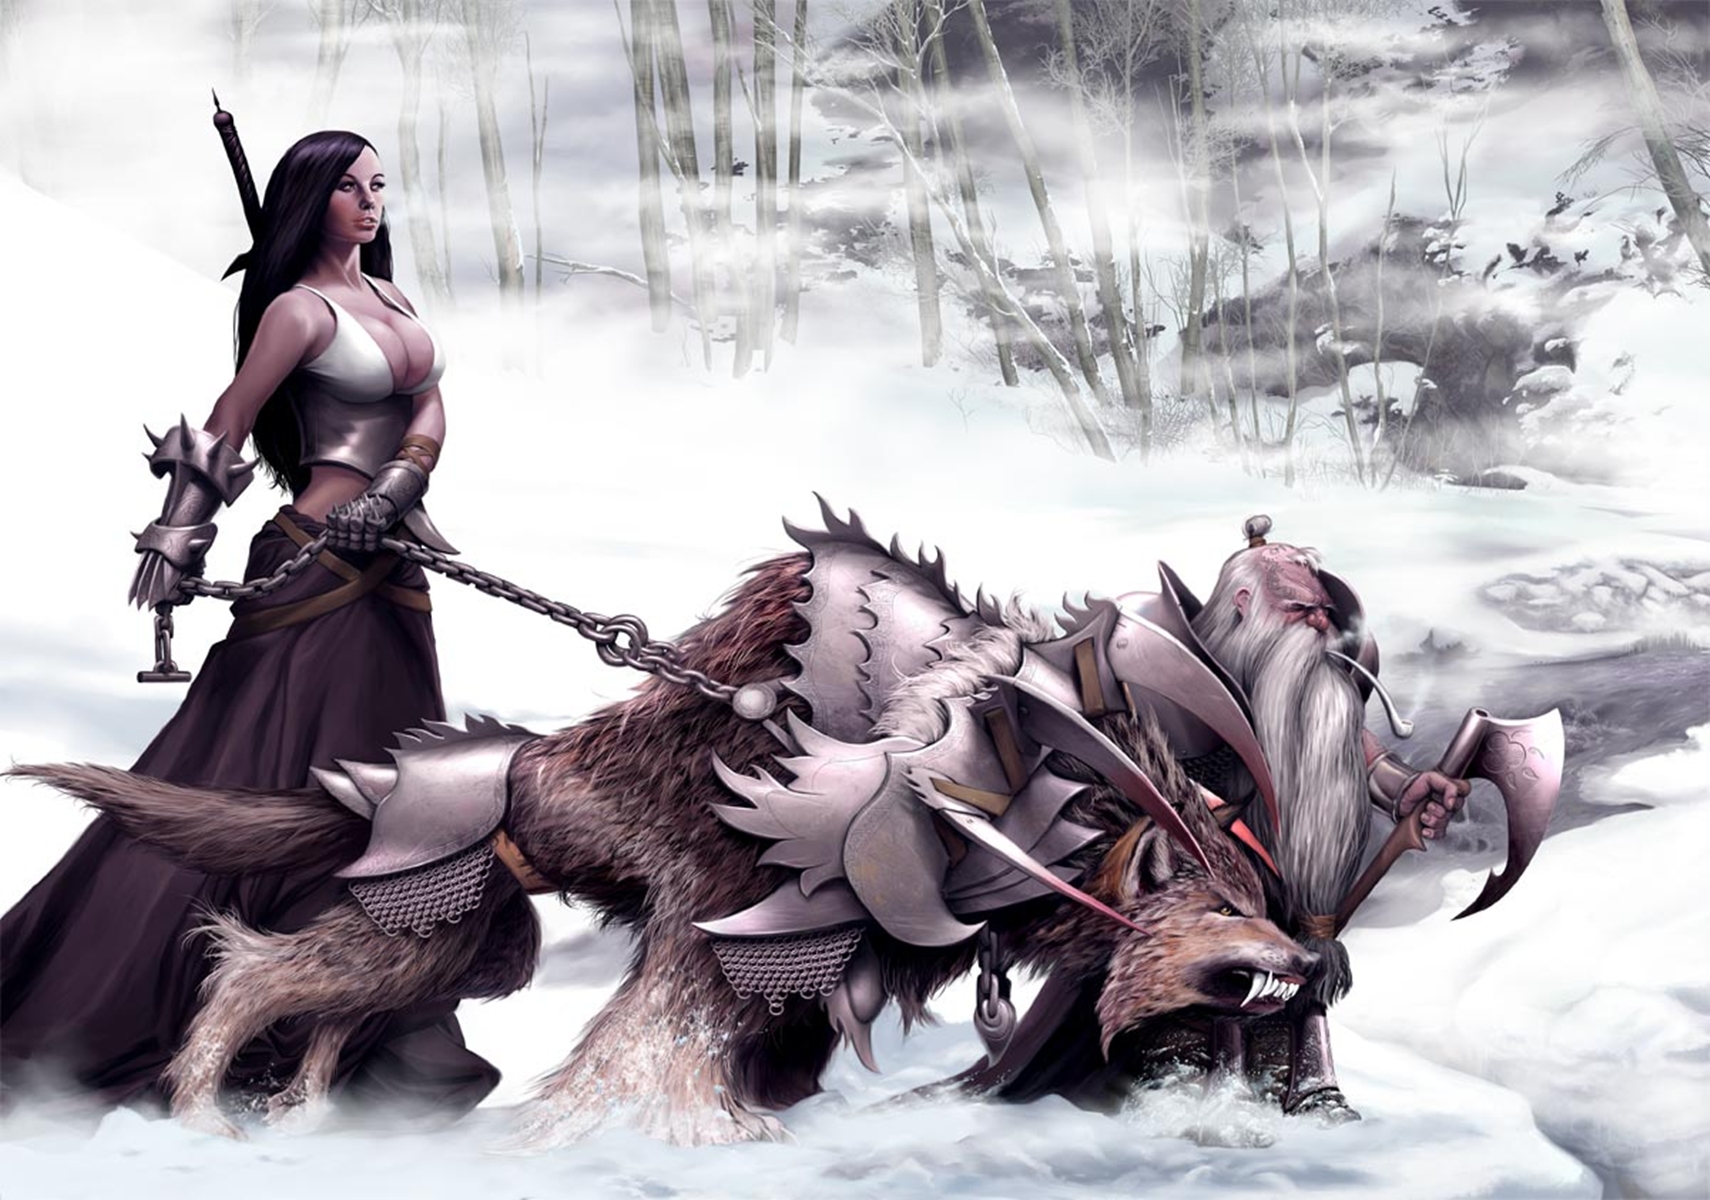 Fantasy warrior in winter armor, accompanied by a dwarf, in the Winter Warriors wallpaper.